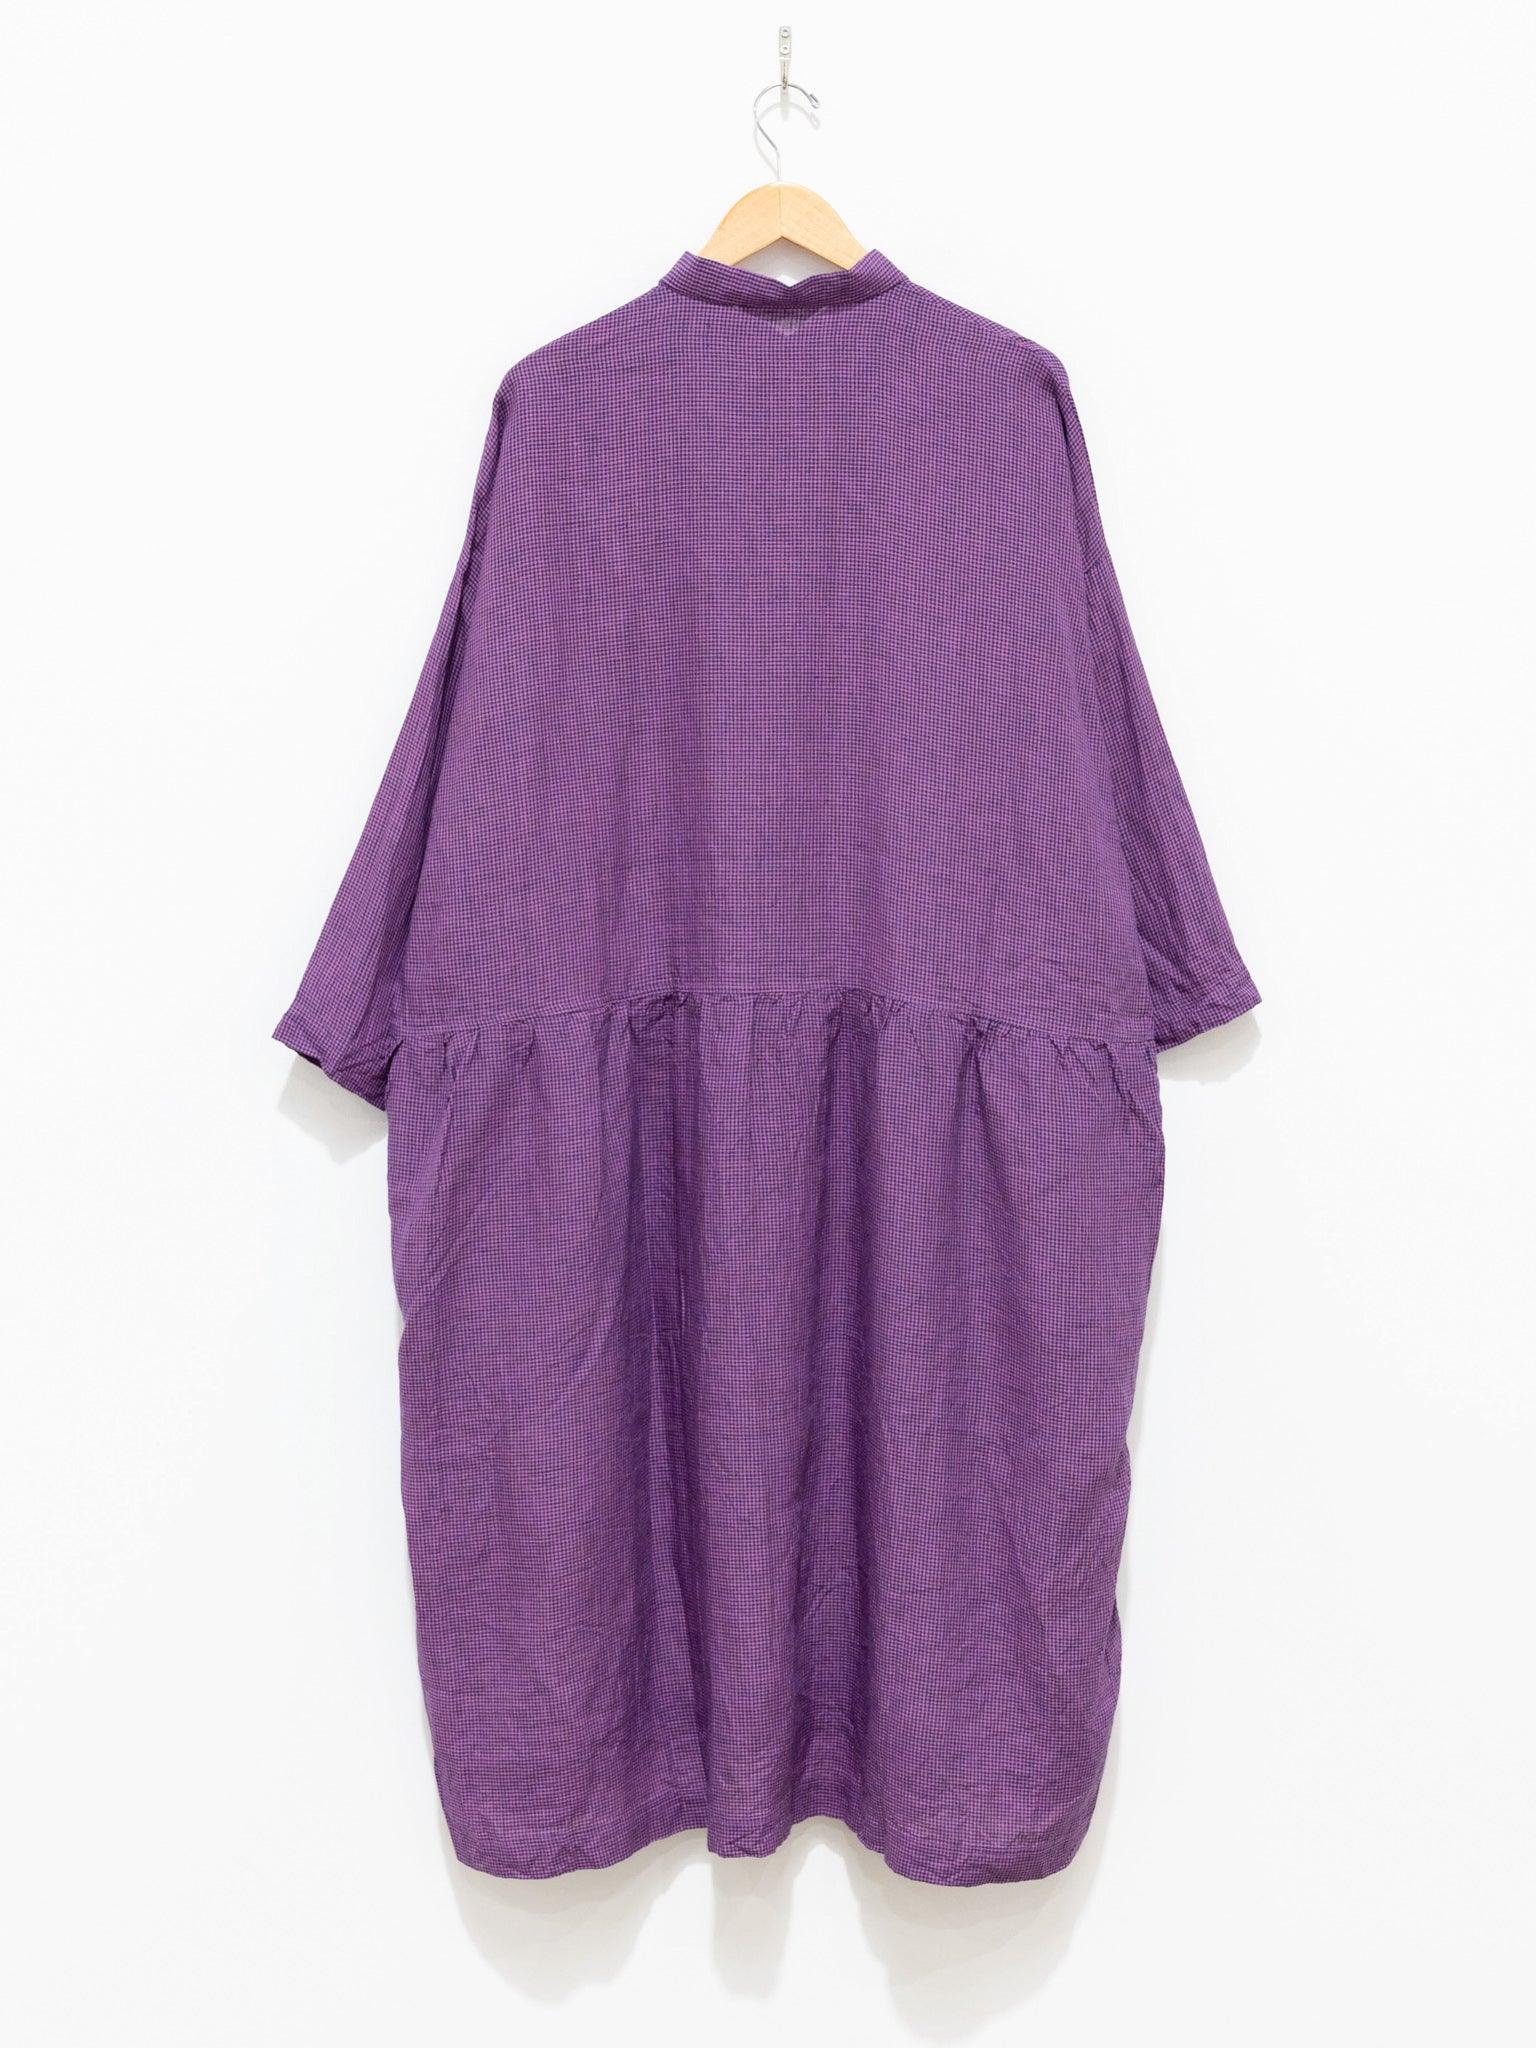 Namu Shop - Ichi Antiquites Linen Indigo Gingham Shirt Dress - Indigo x Pink